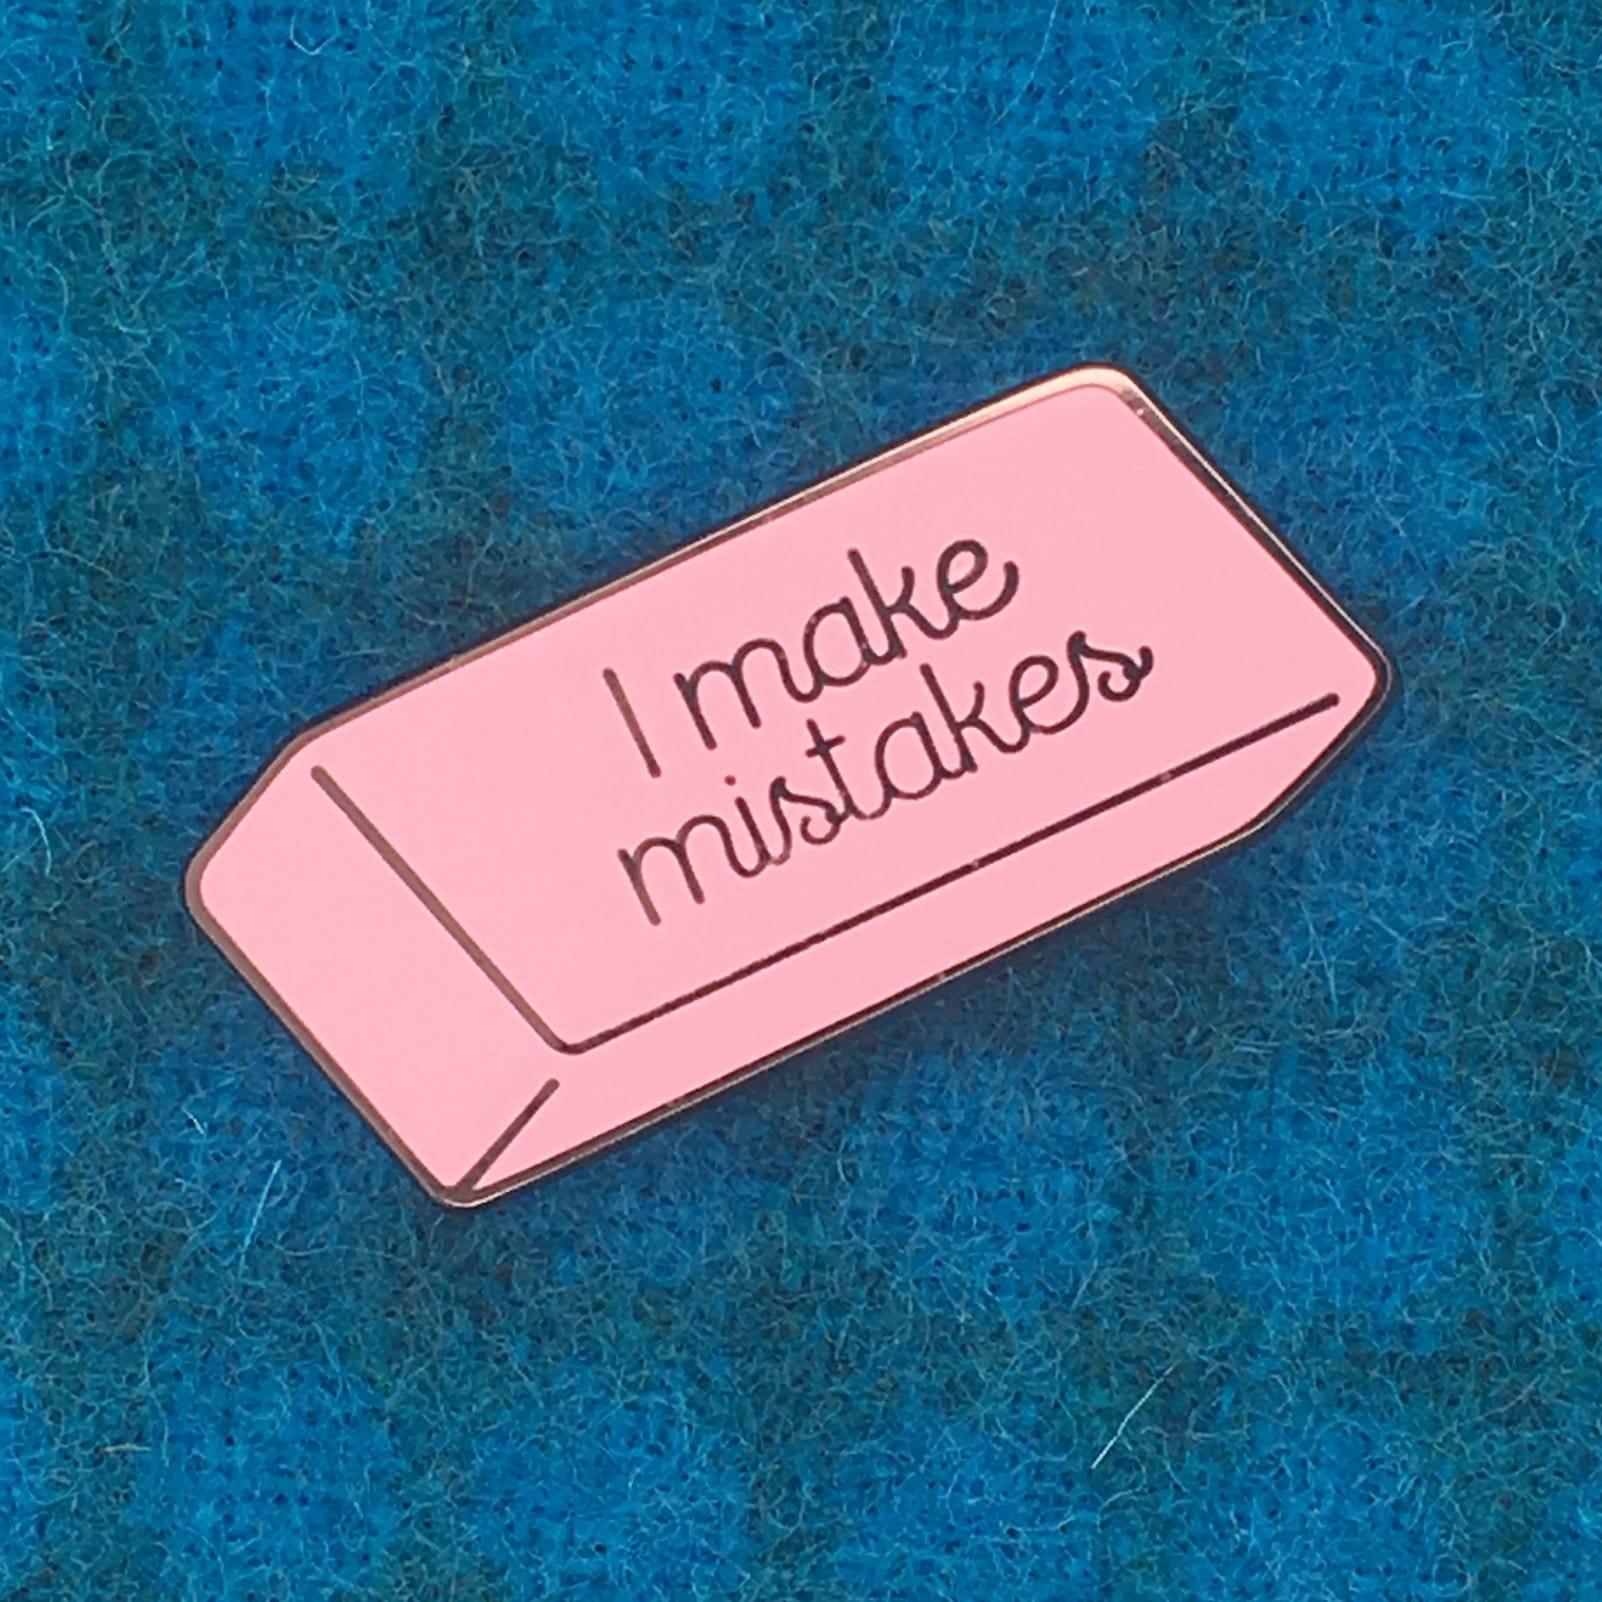 I Make Mistakes Pin